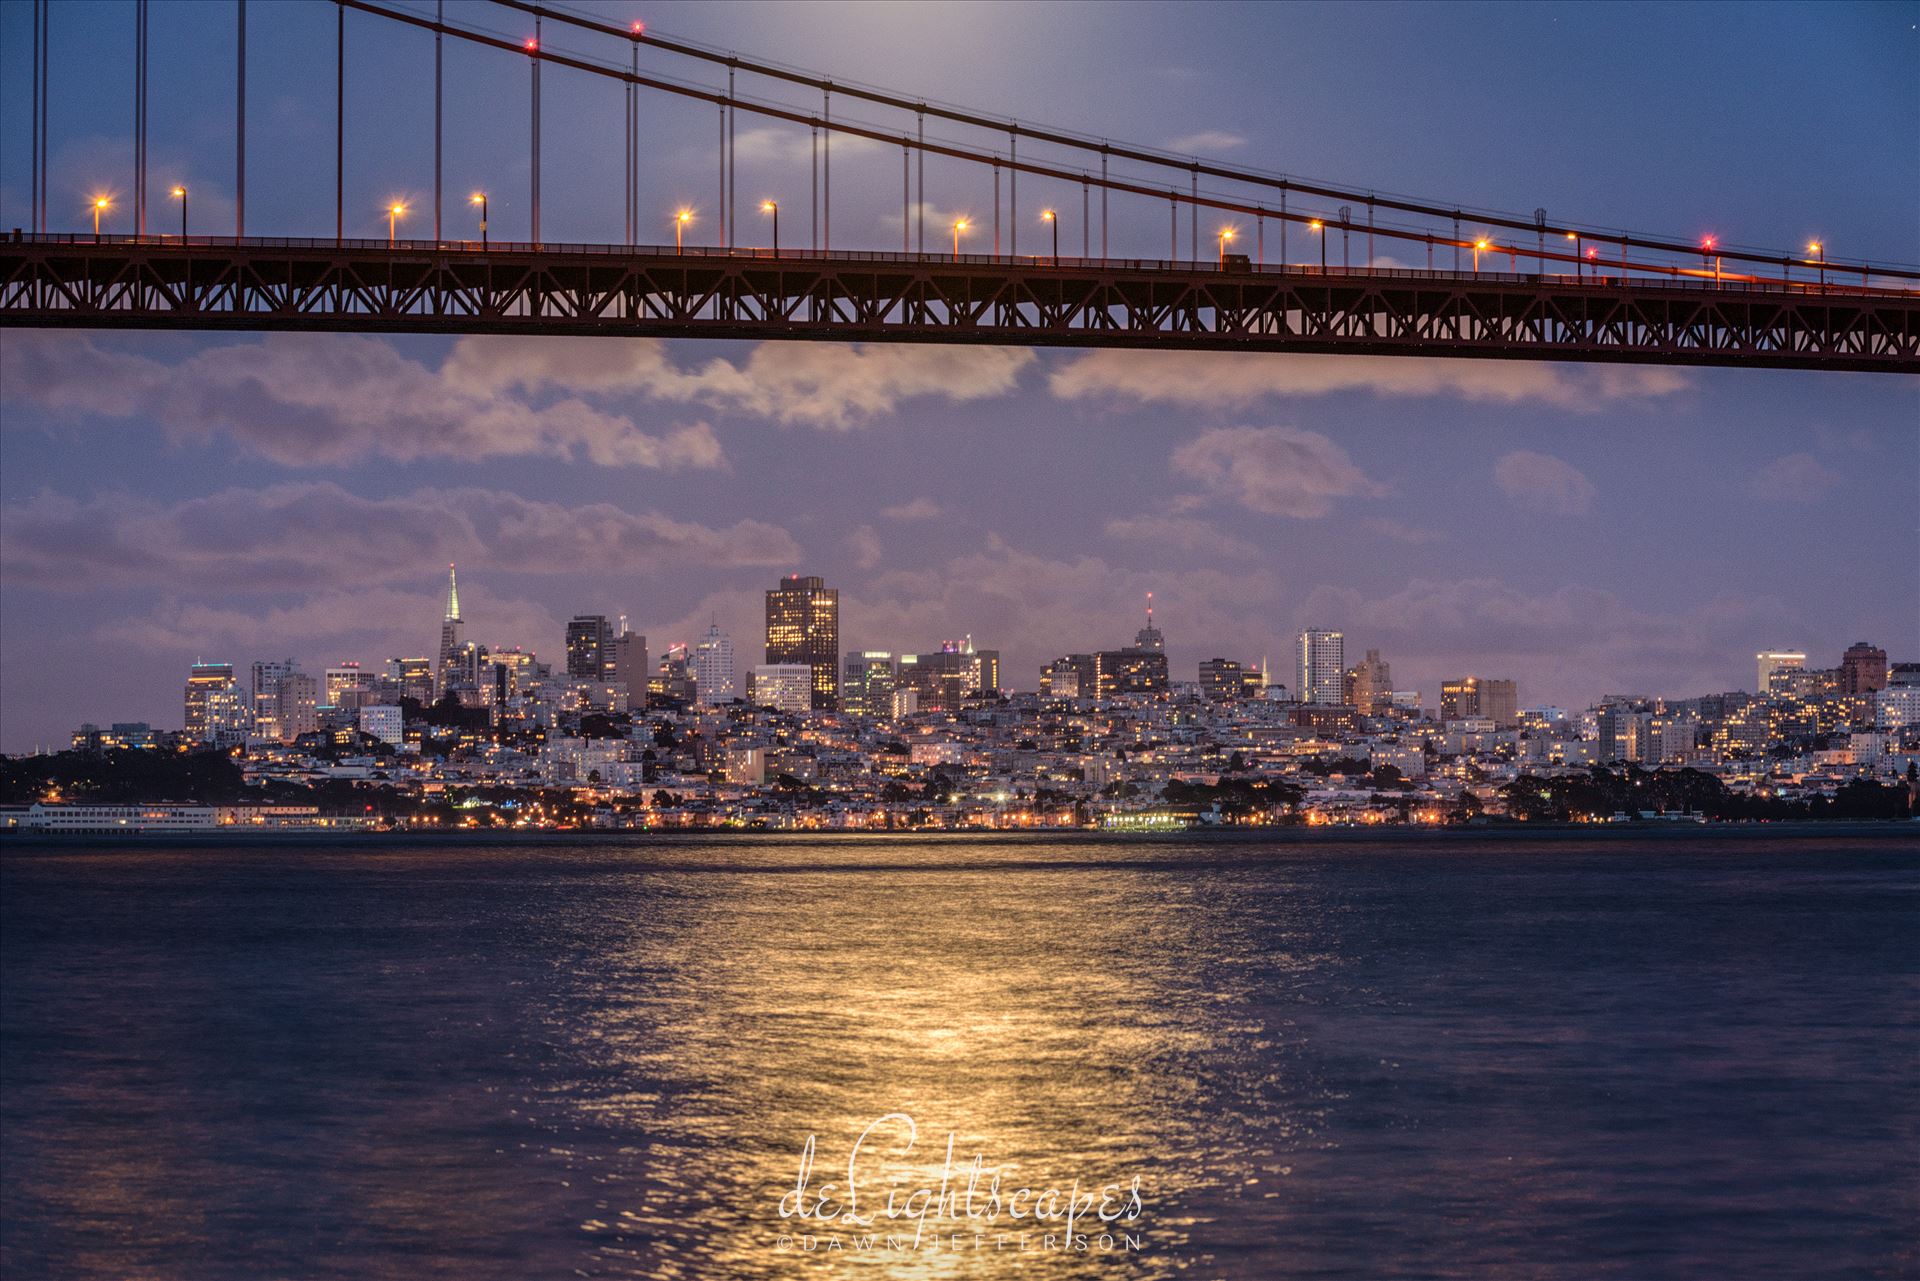 San Francisco by Moonlight - A full moon rises above the Golden Gate Bridge illuminating the San Francisco skyline. by Dawn Jefferson